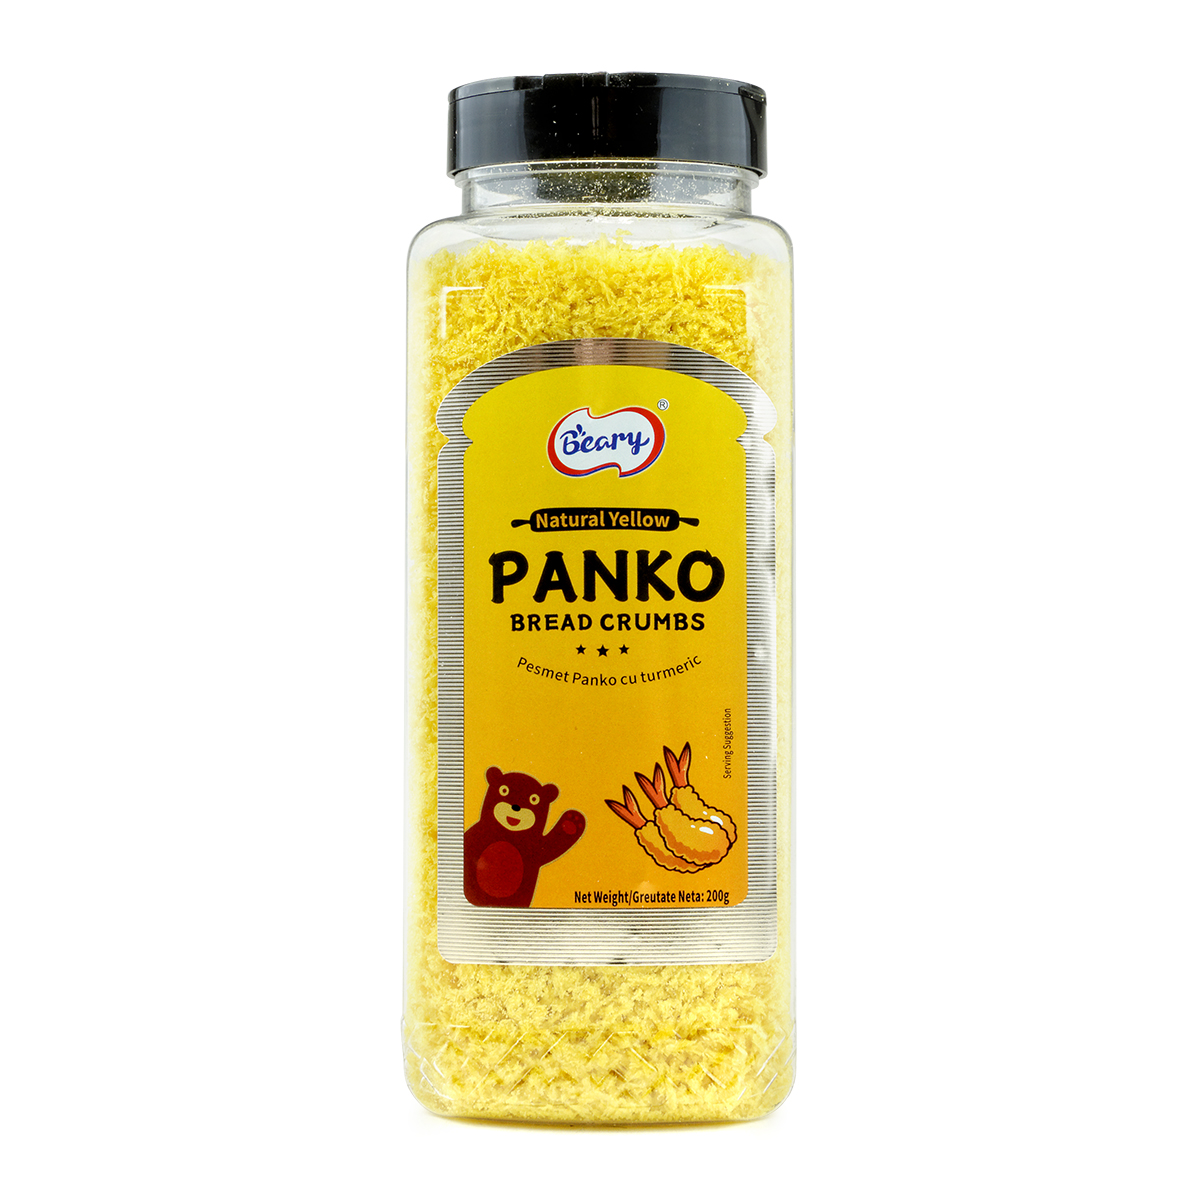 Panko, amidon si hartie de orez - Pesmet Panko cu turmeric BEARY 200g, asianfood.ro